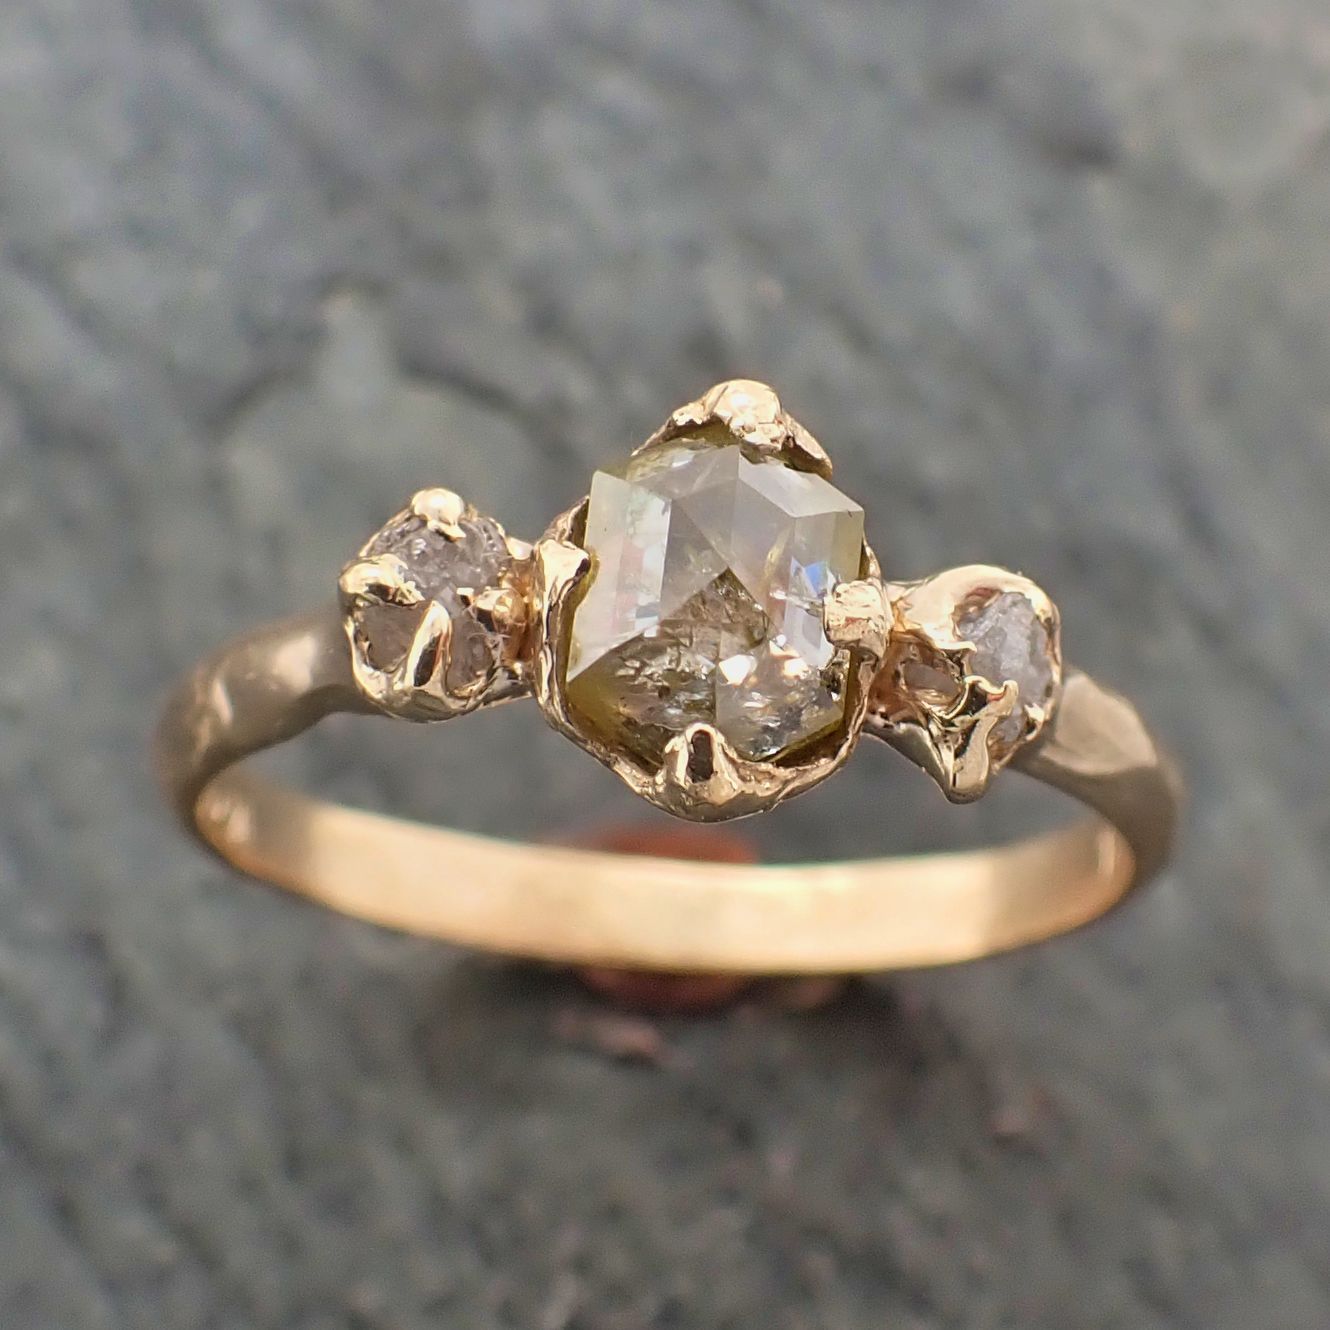 fancy cut white diamond engagement 18k yellow gold multi stone wedding ring stacking rough diamond ring byangeline 2264 Alternative Engagement